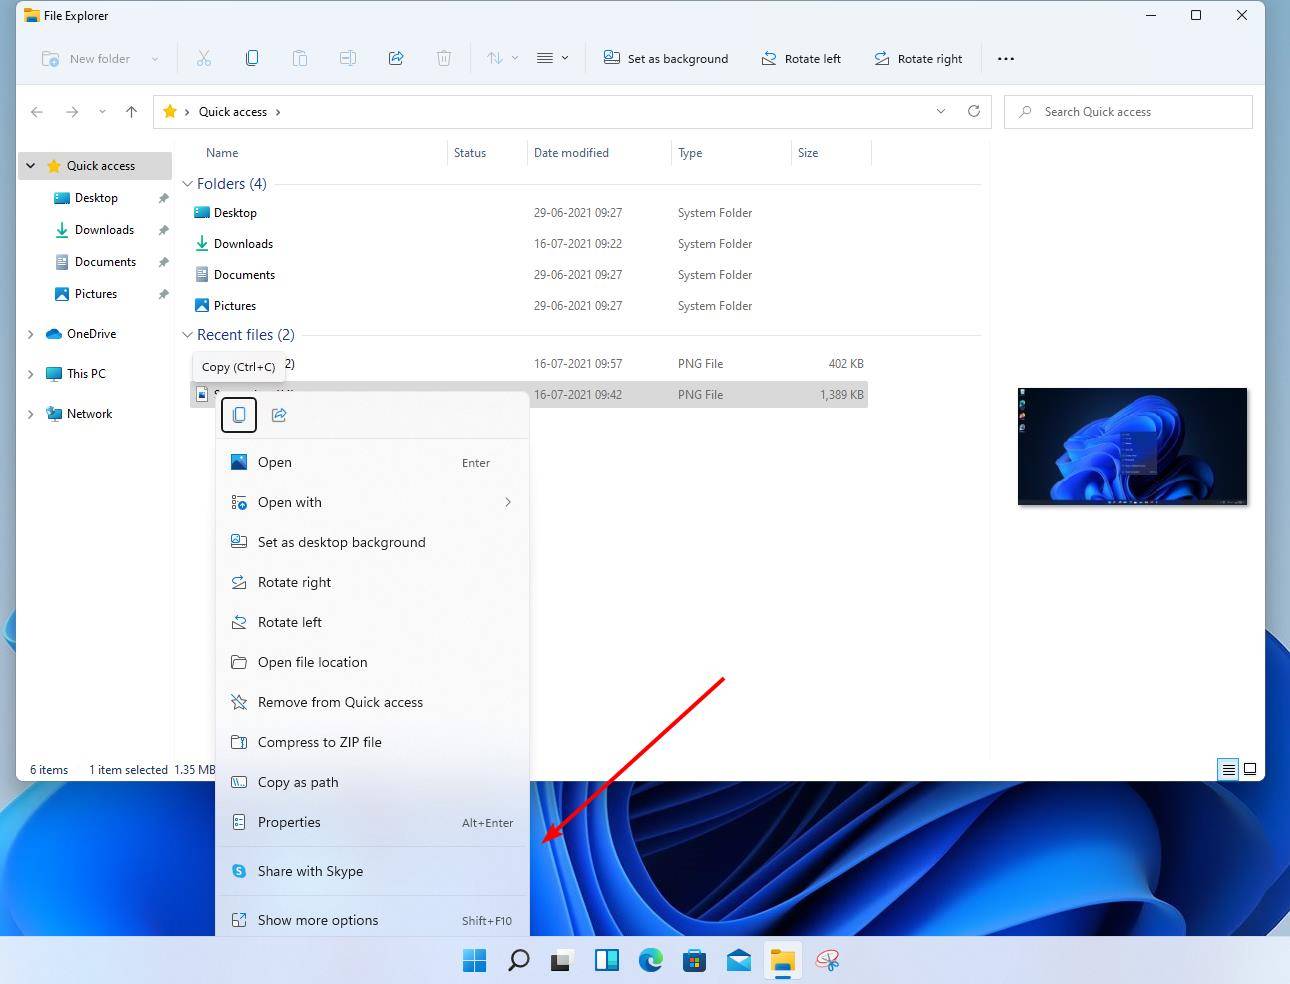 Windows-11-Insider-Preview-Build-22000.71-acrylic-menu-in-Explorer